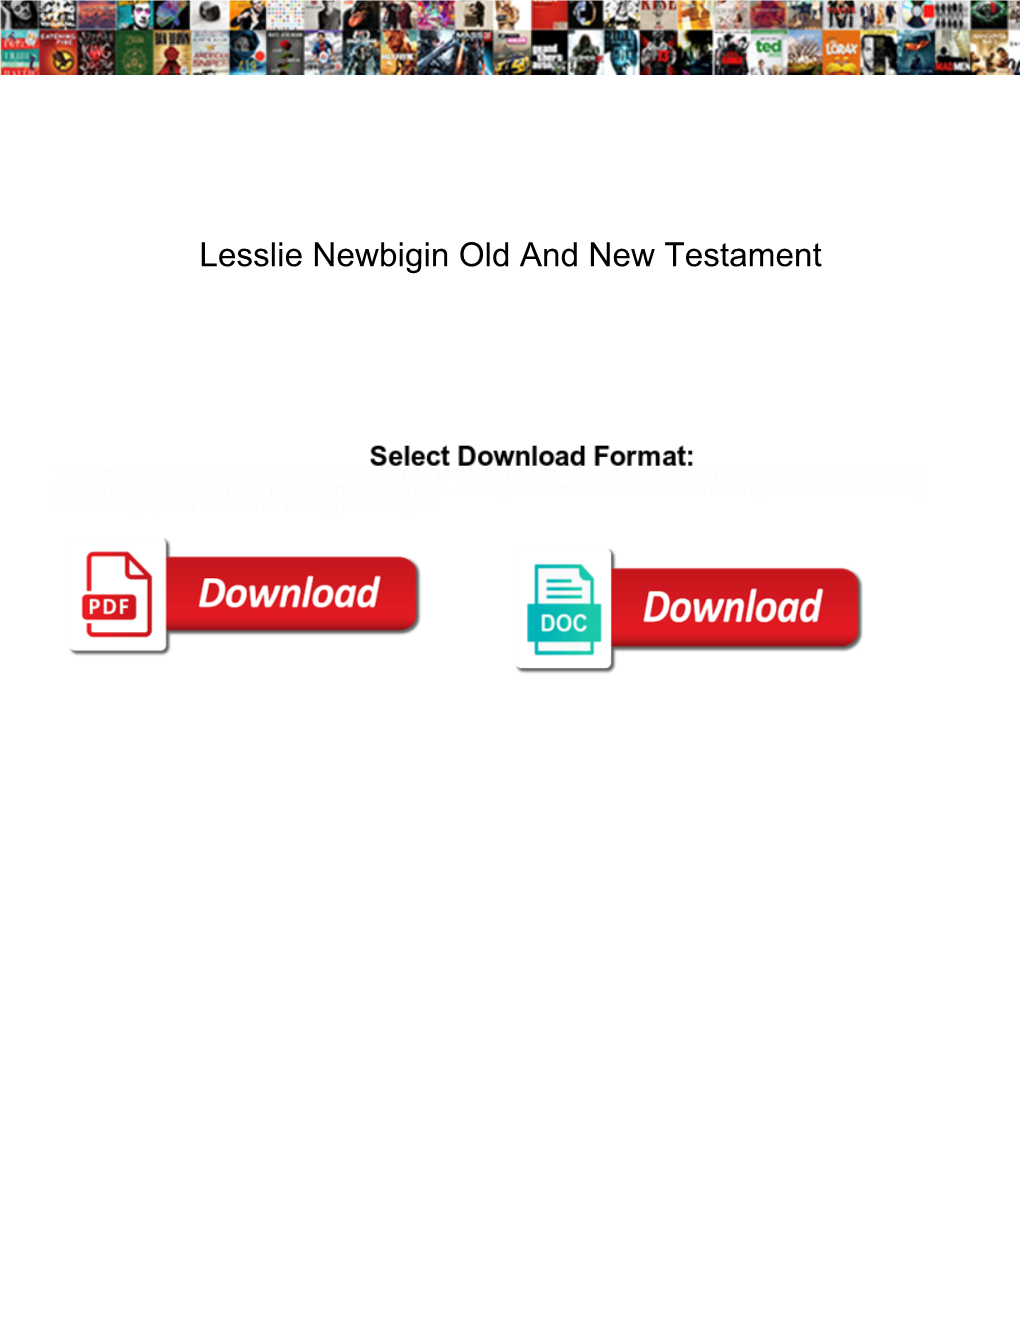 Lesslie Newbigin Old and New Testament